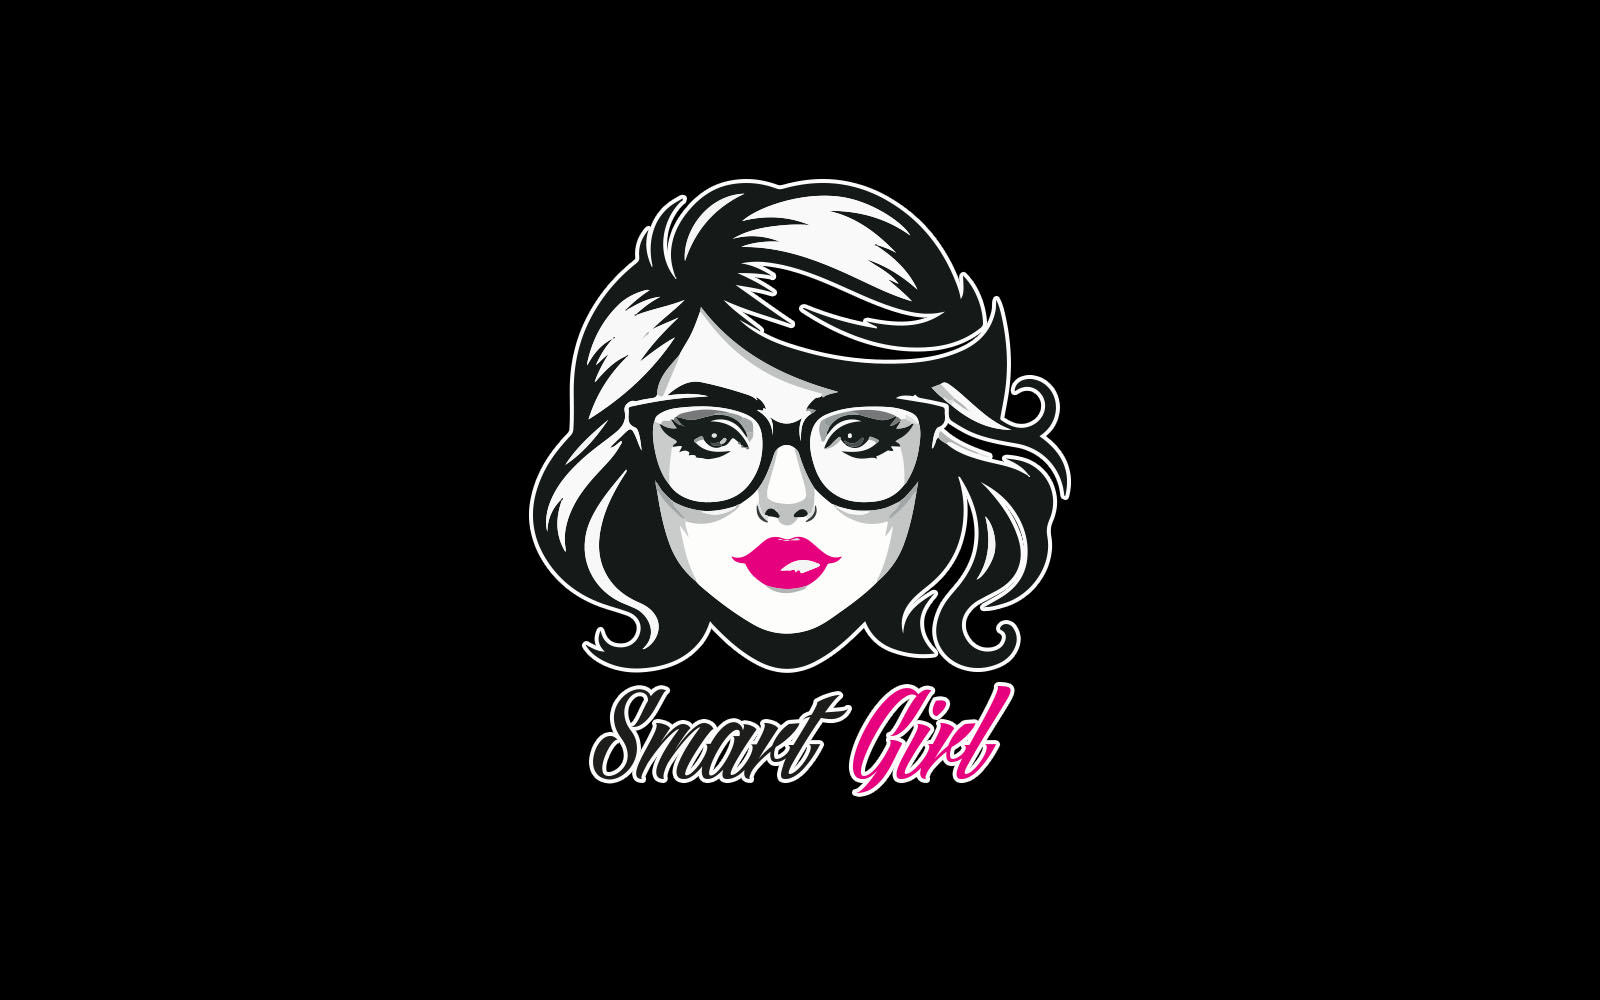 Smart and elegant girl logo template